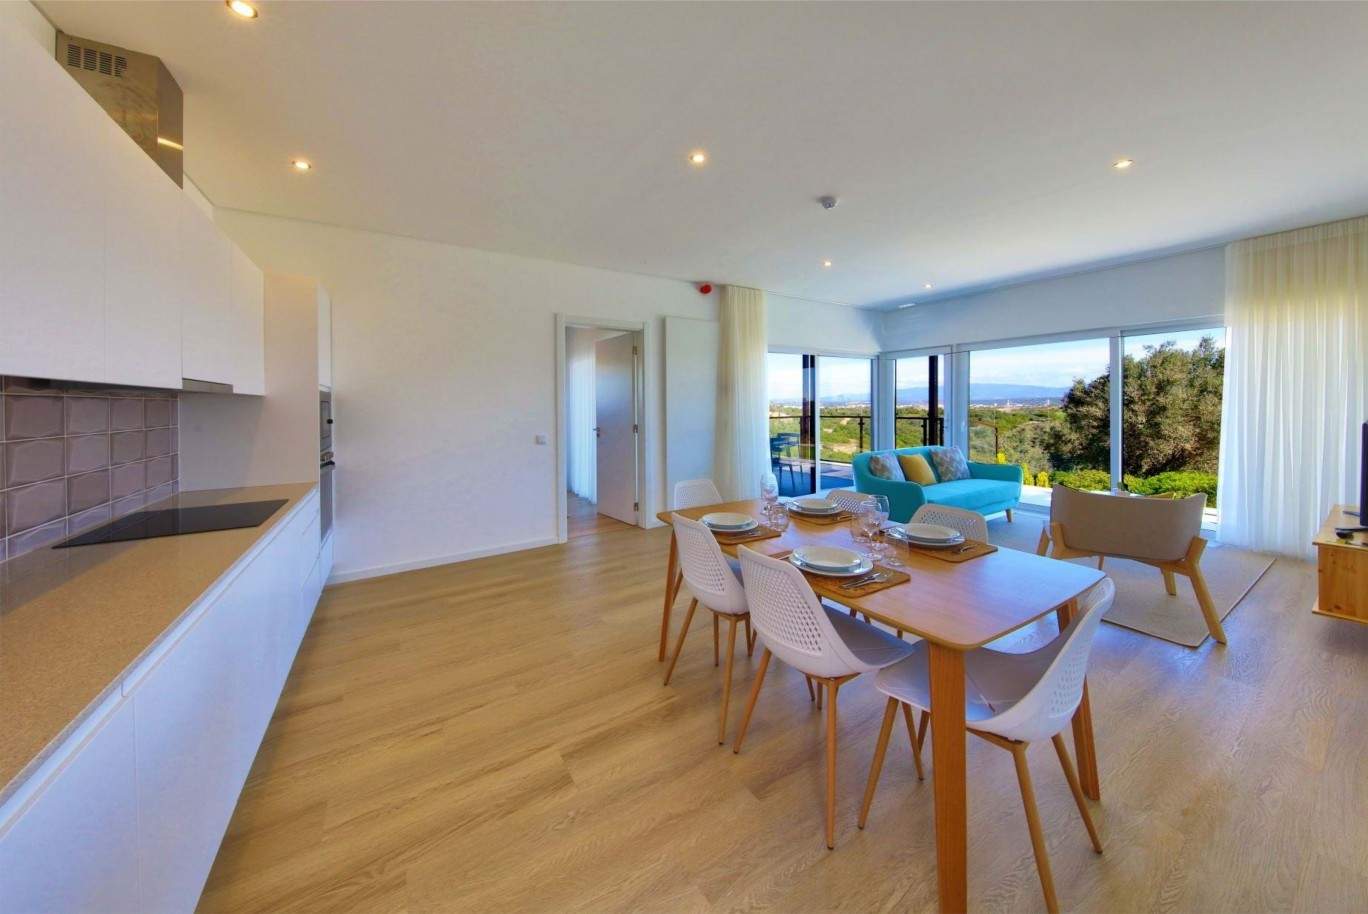 2+1 bedroom villa in resort, for sale in Carvoeiro, Algarve_204775